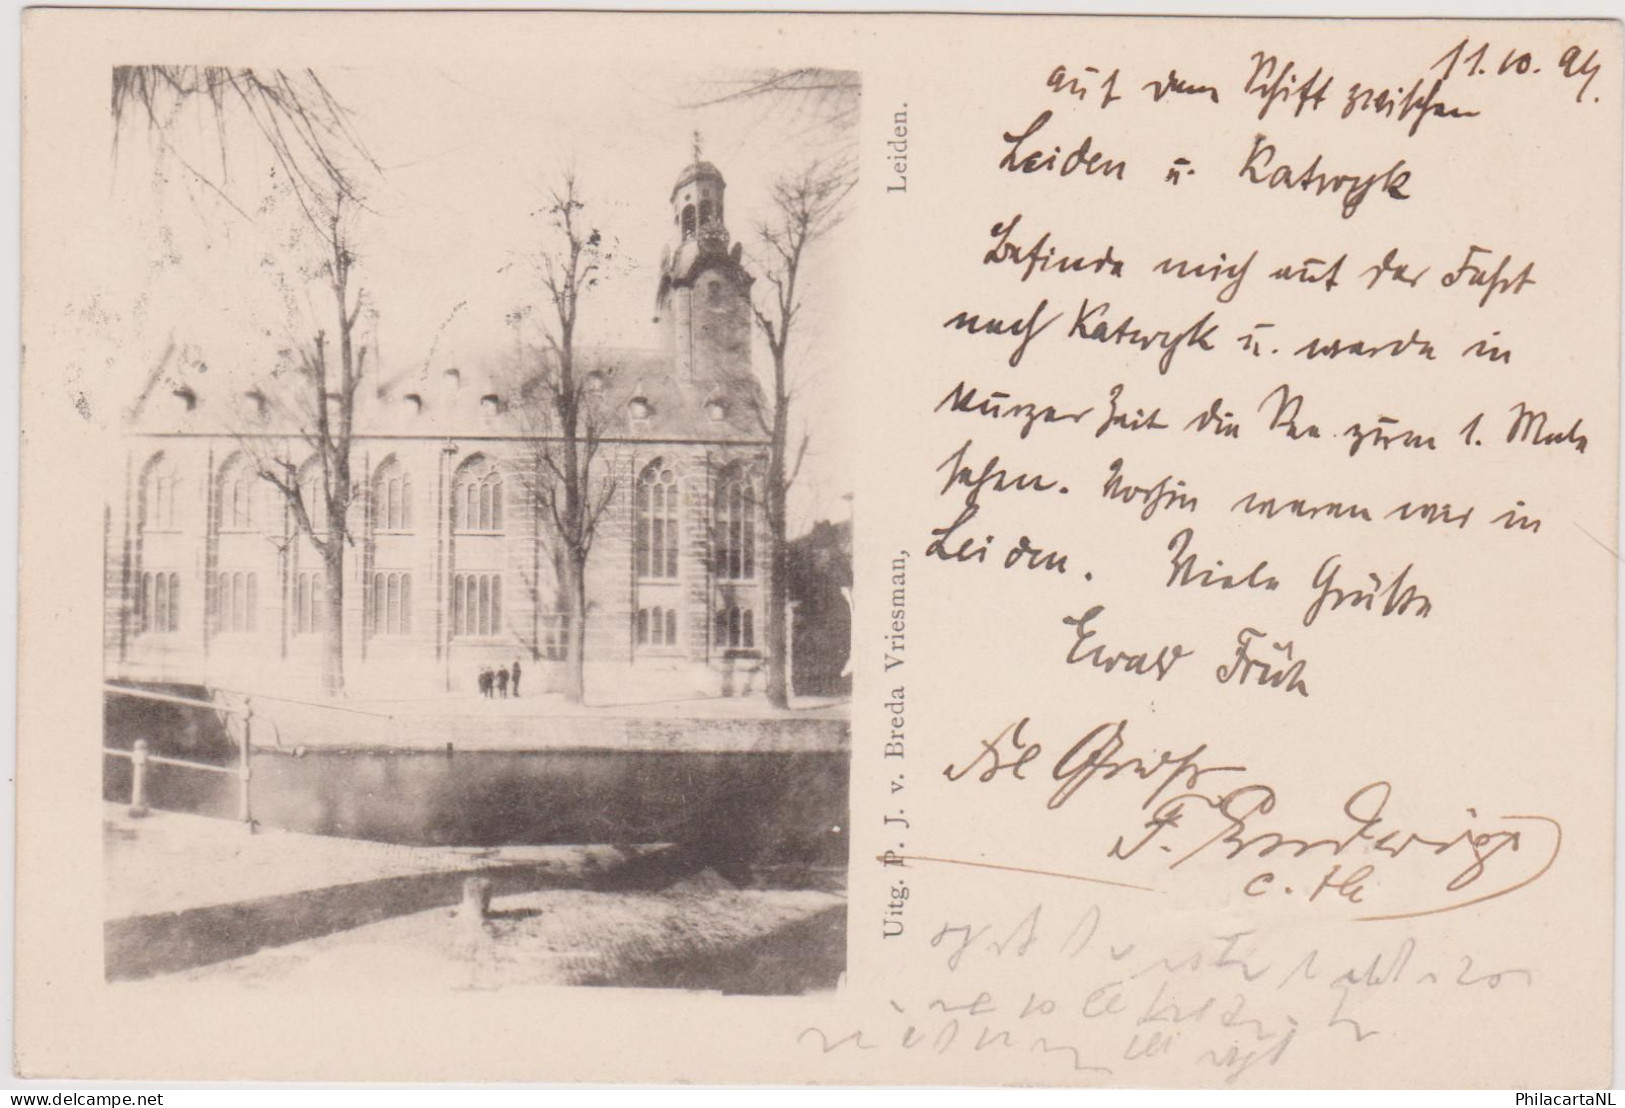 Leiden - Litho Academiegebouw RU Leiden - 1899 - Leiden